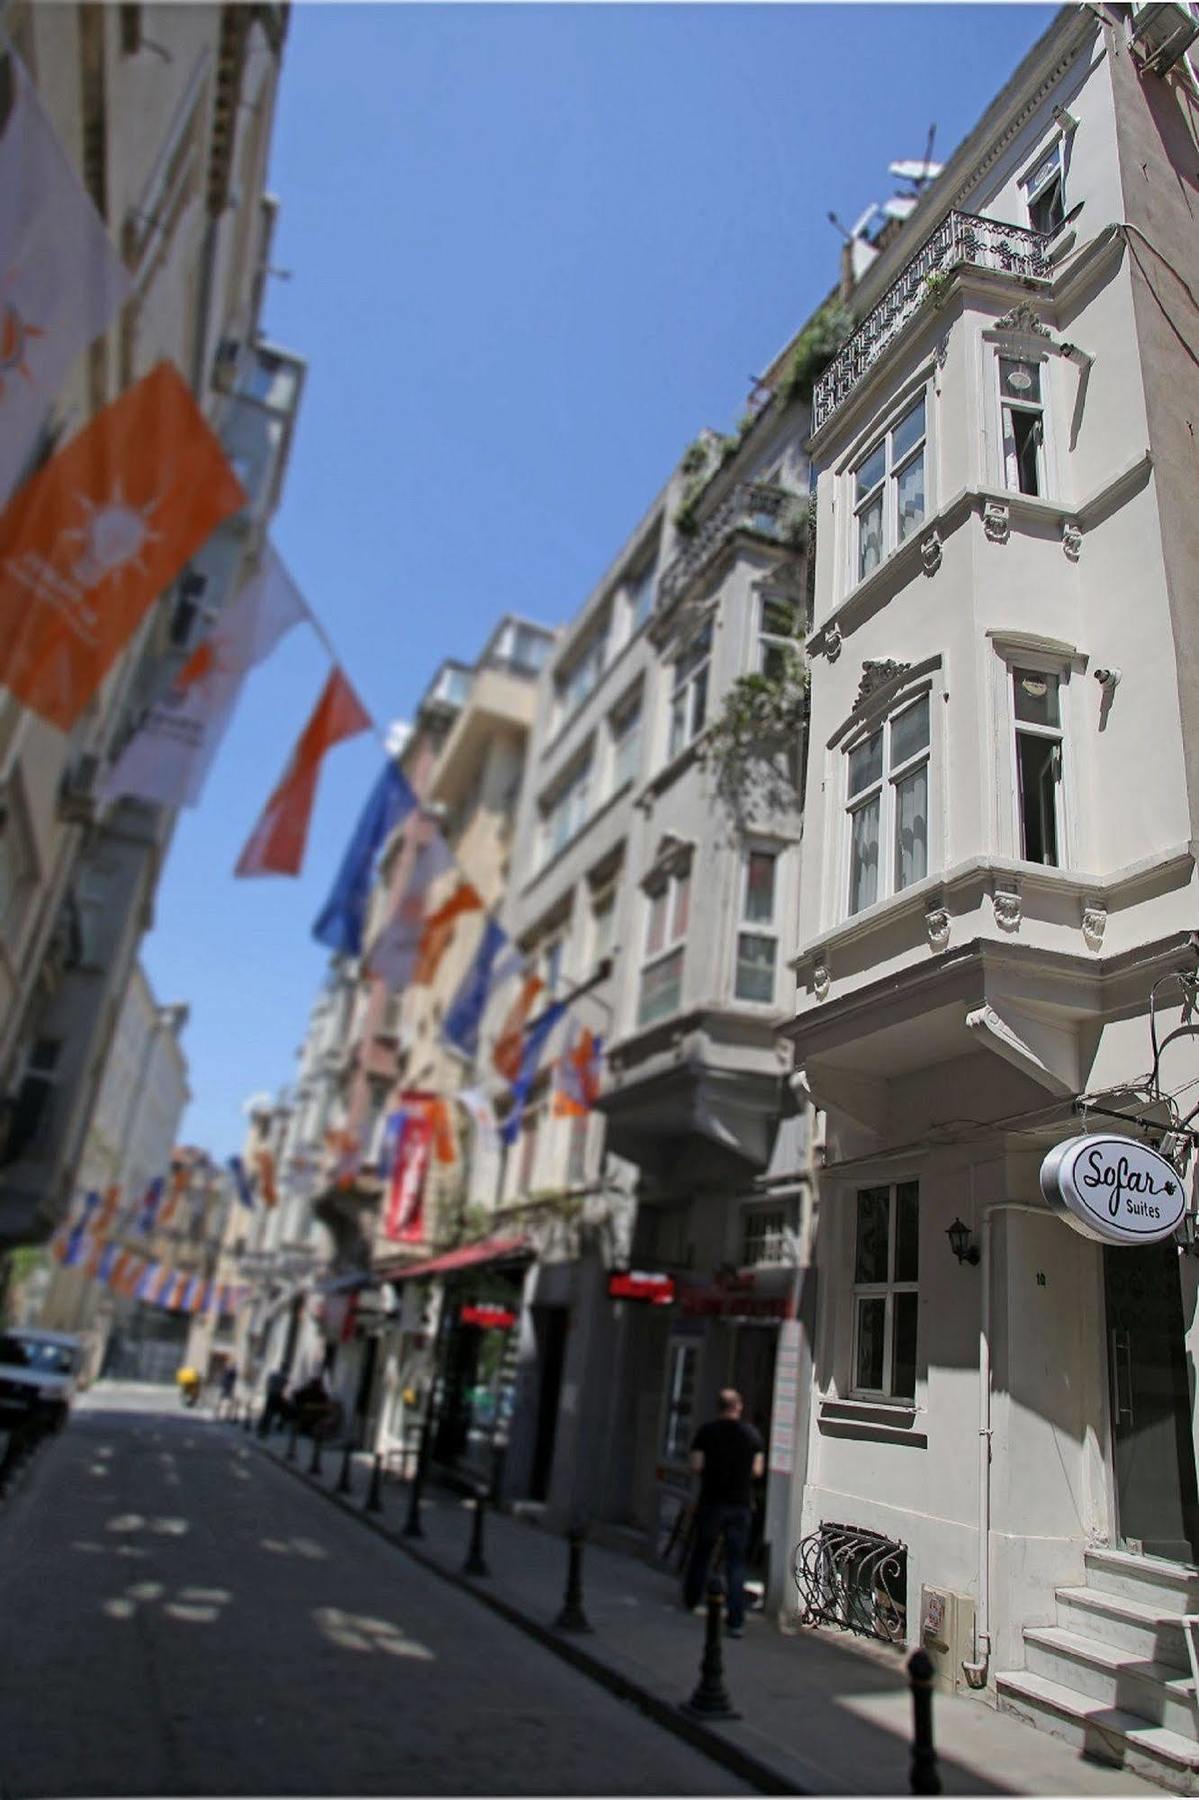 La Pazza Suites İstanbul Dış mekan fotoğraf